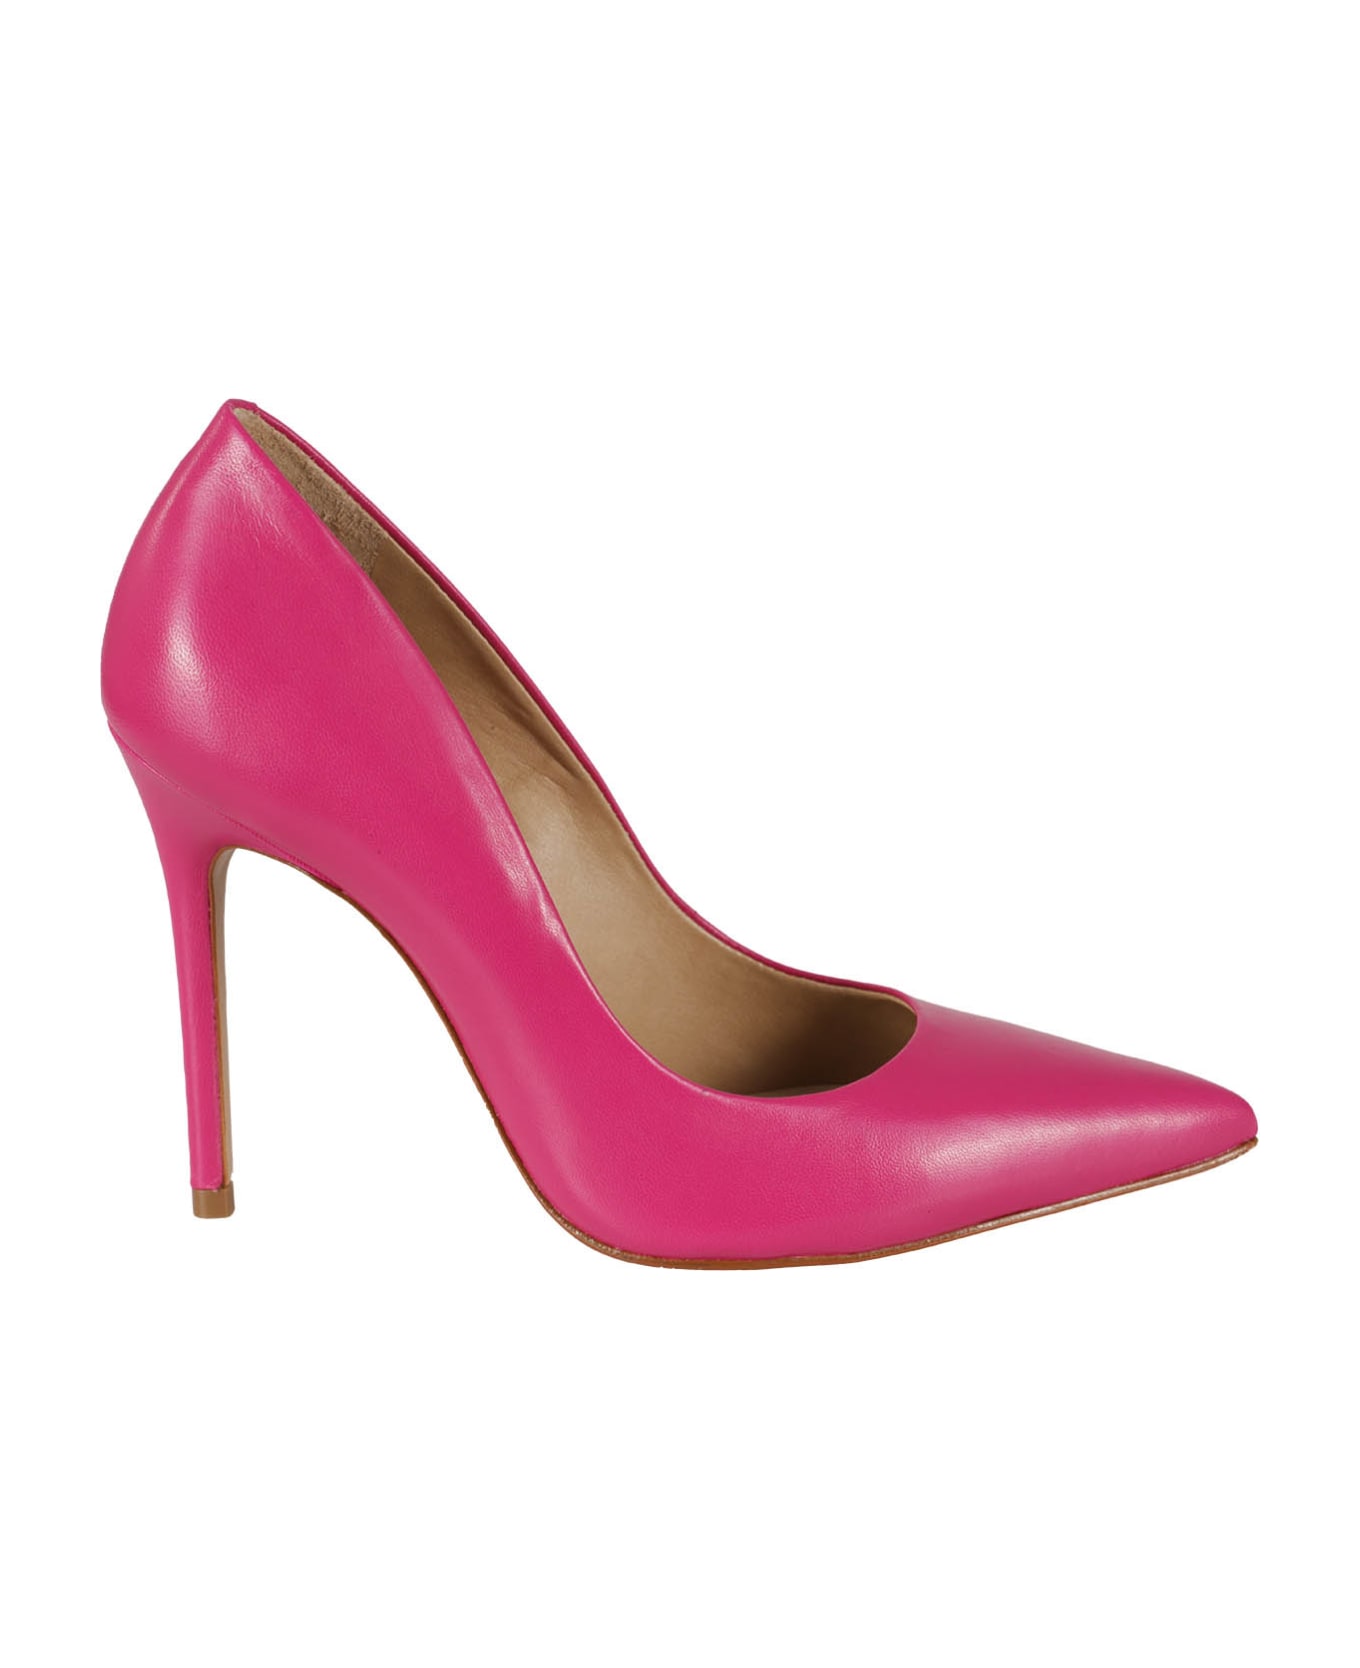 Schutz Shoes - Pink